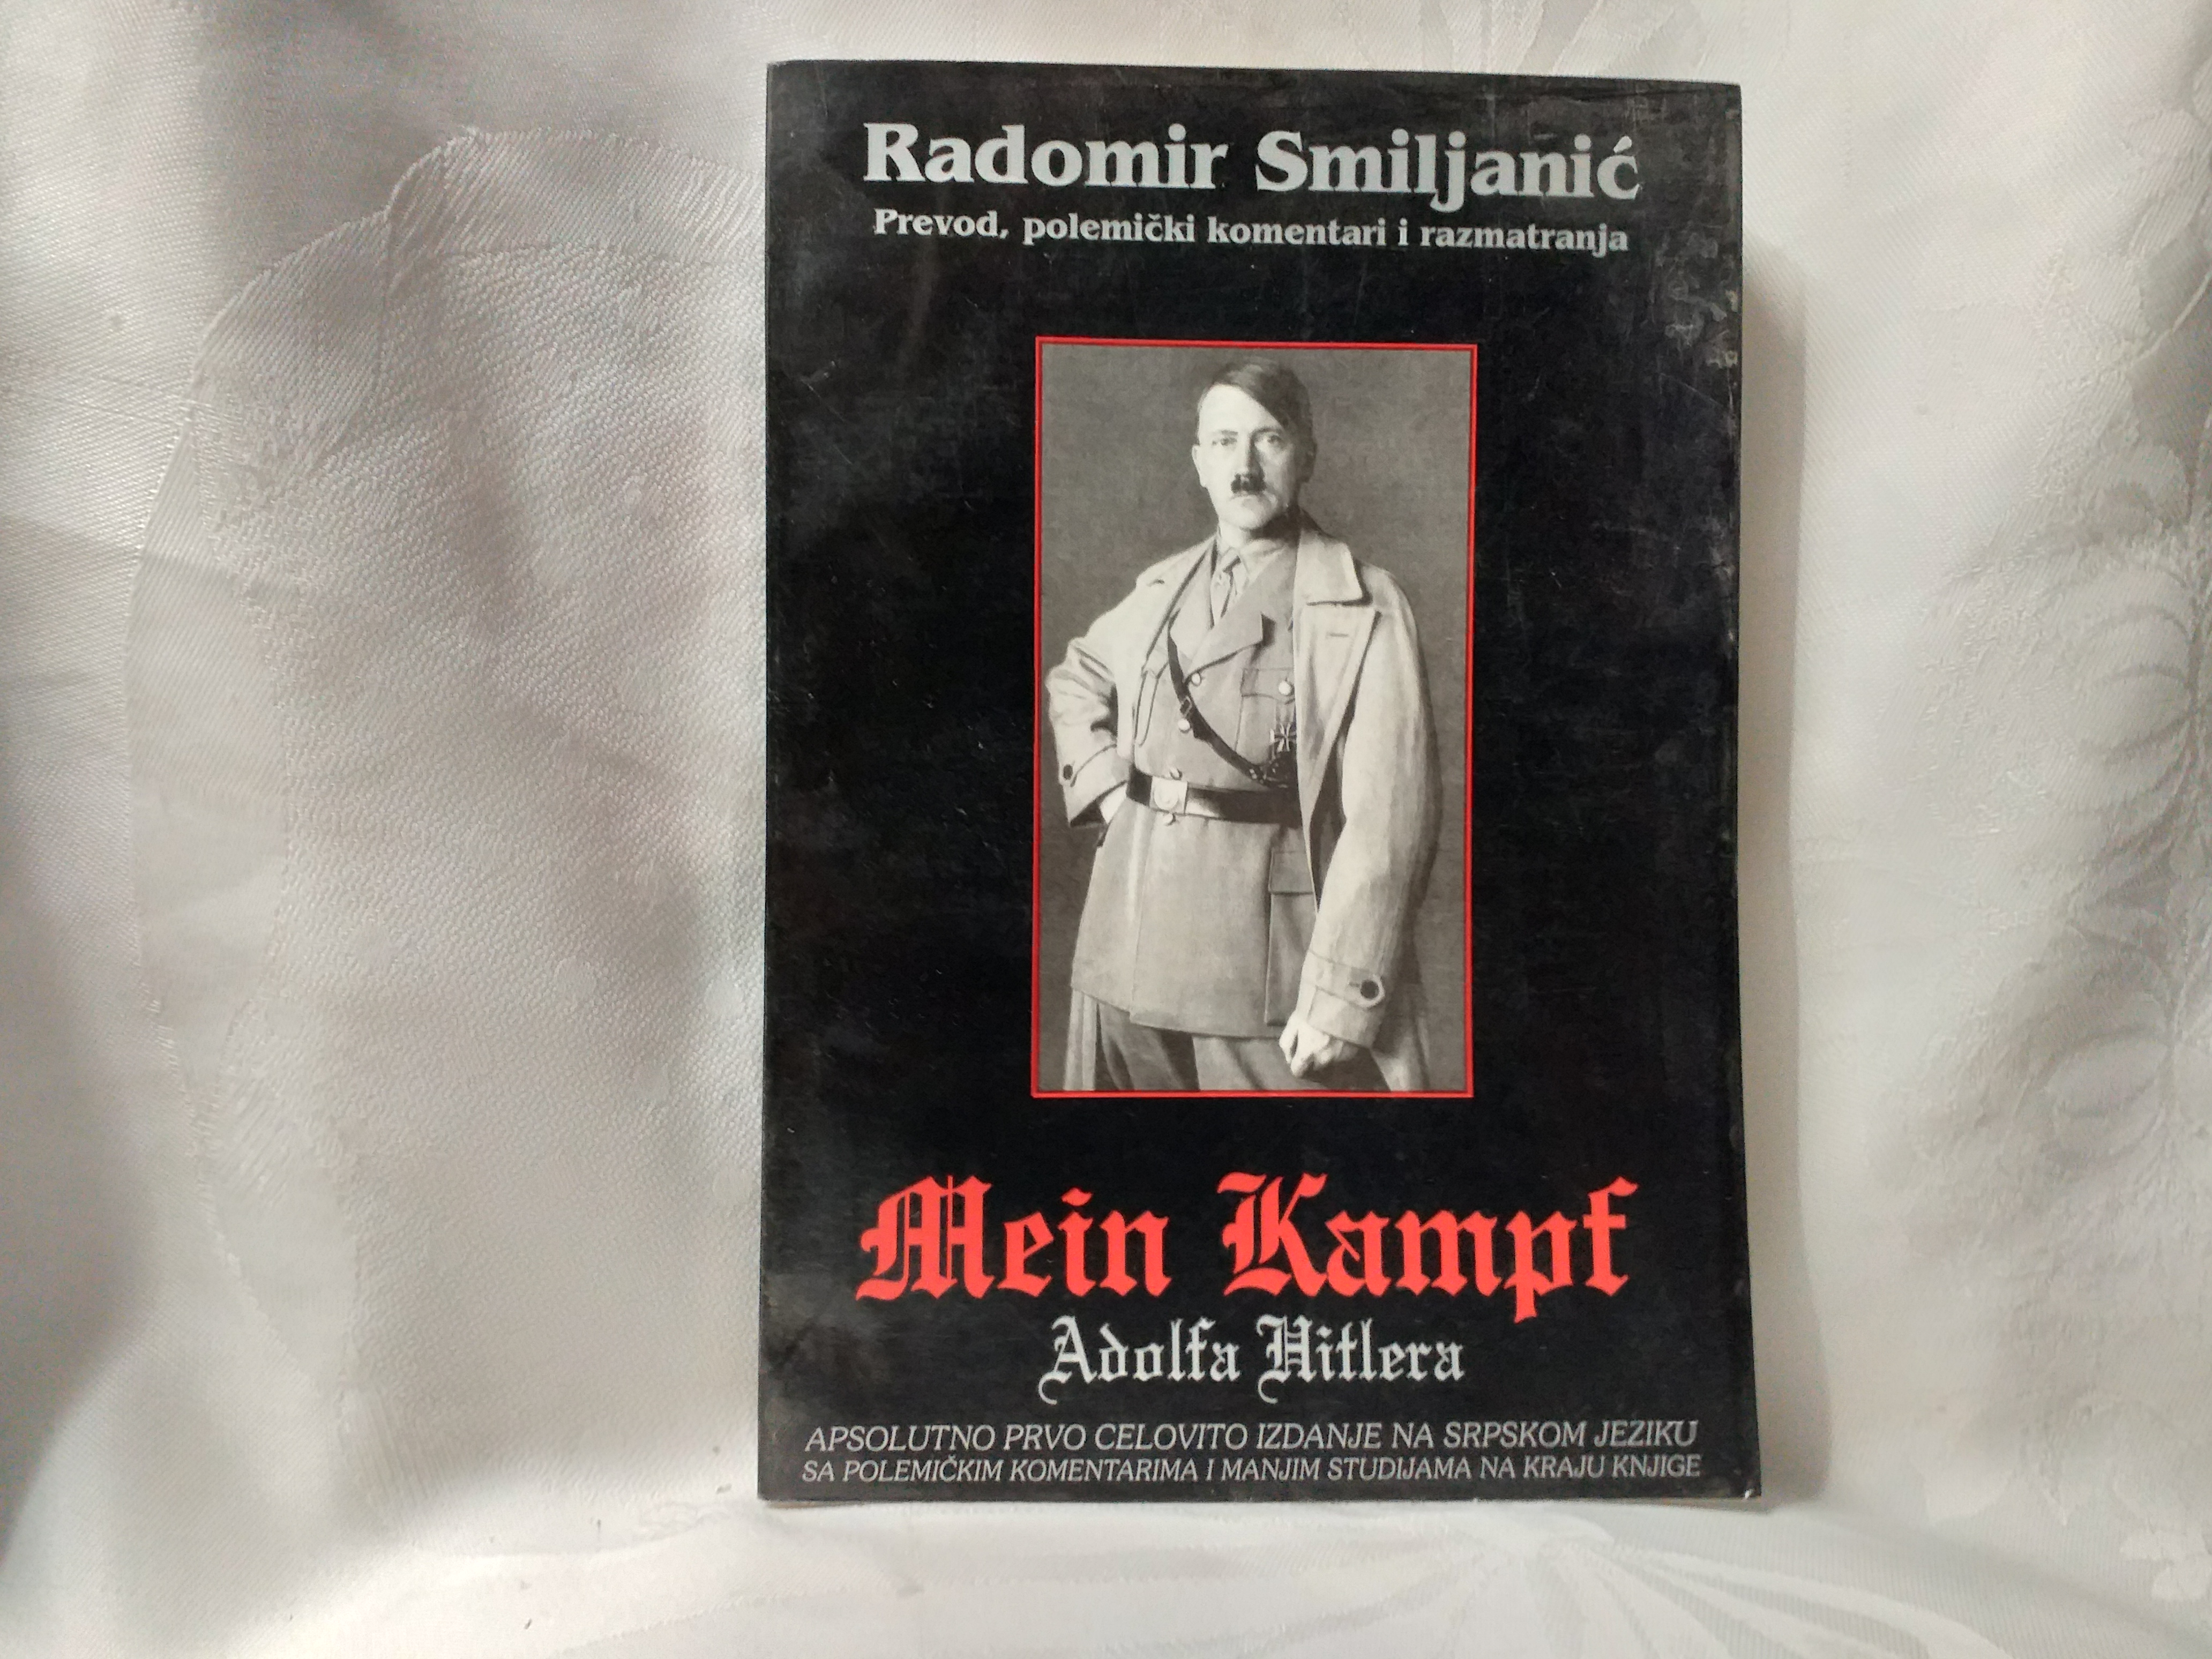 Main kampf Adolfa Hitlera prevod Radomir Smiljanić